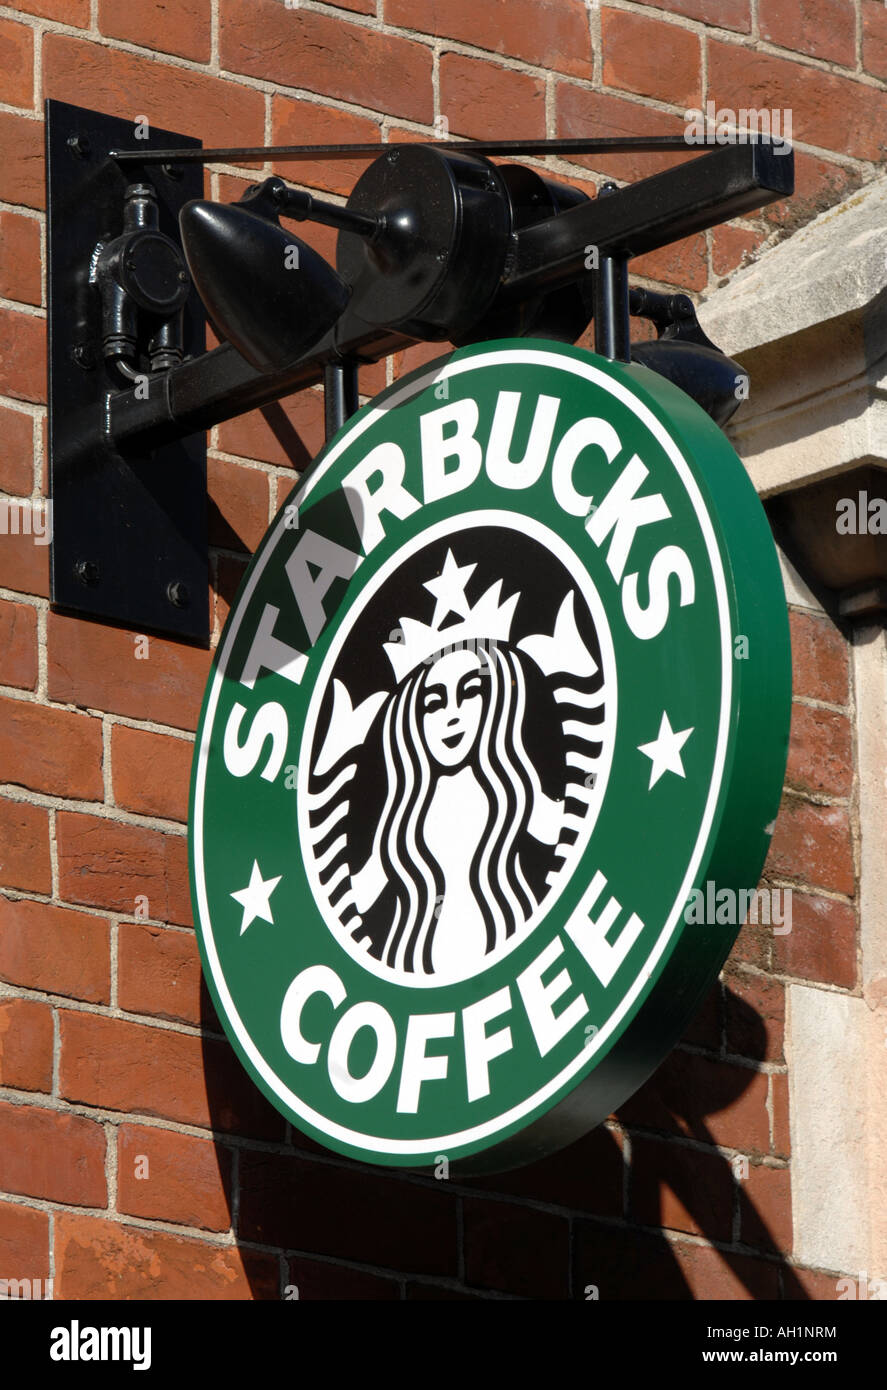 Starbucks Coffee sign Stock Photo